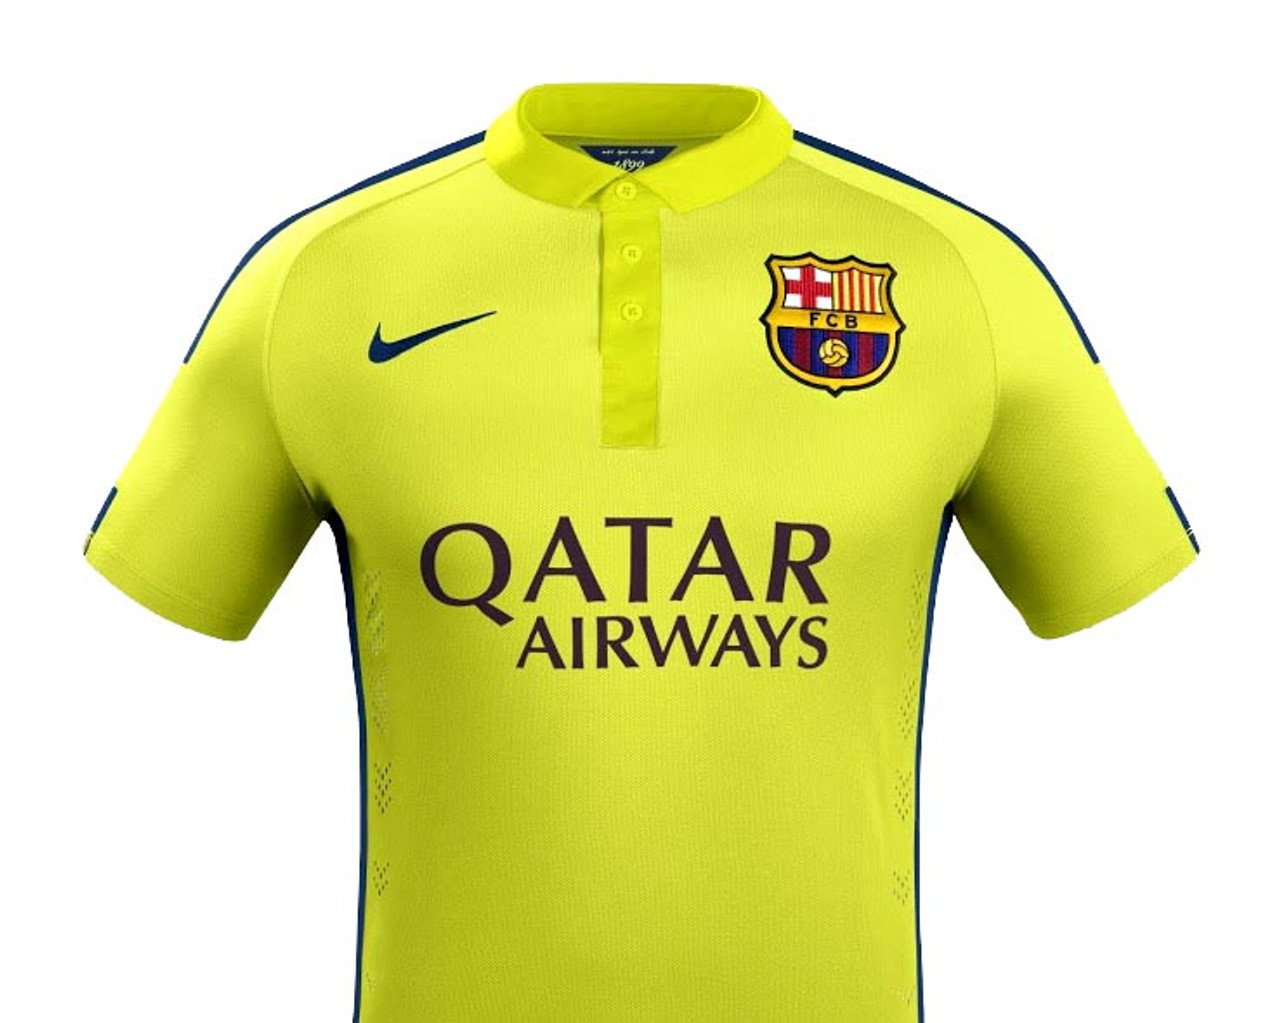 neon barcelona jersey